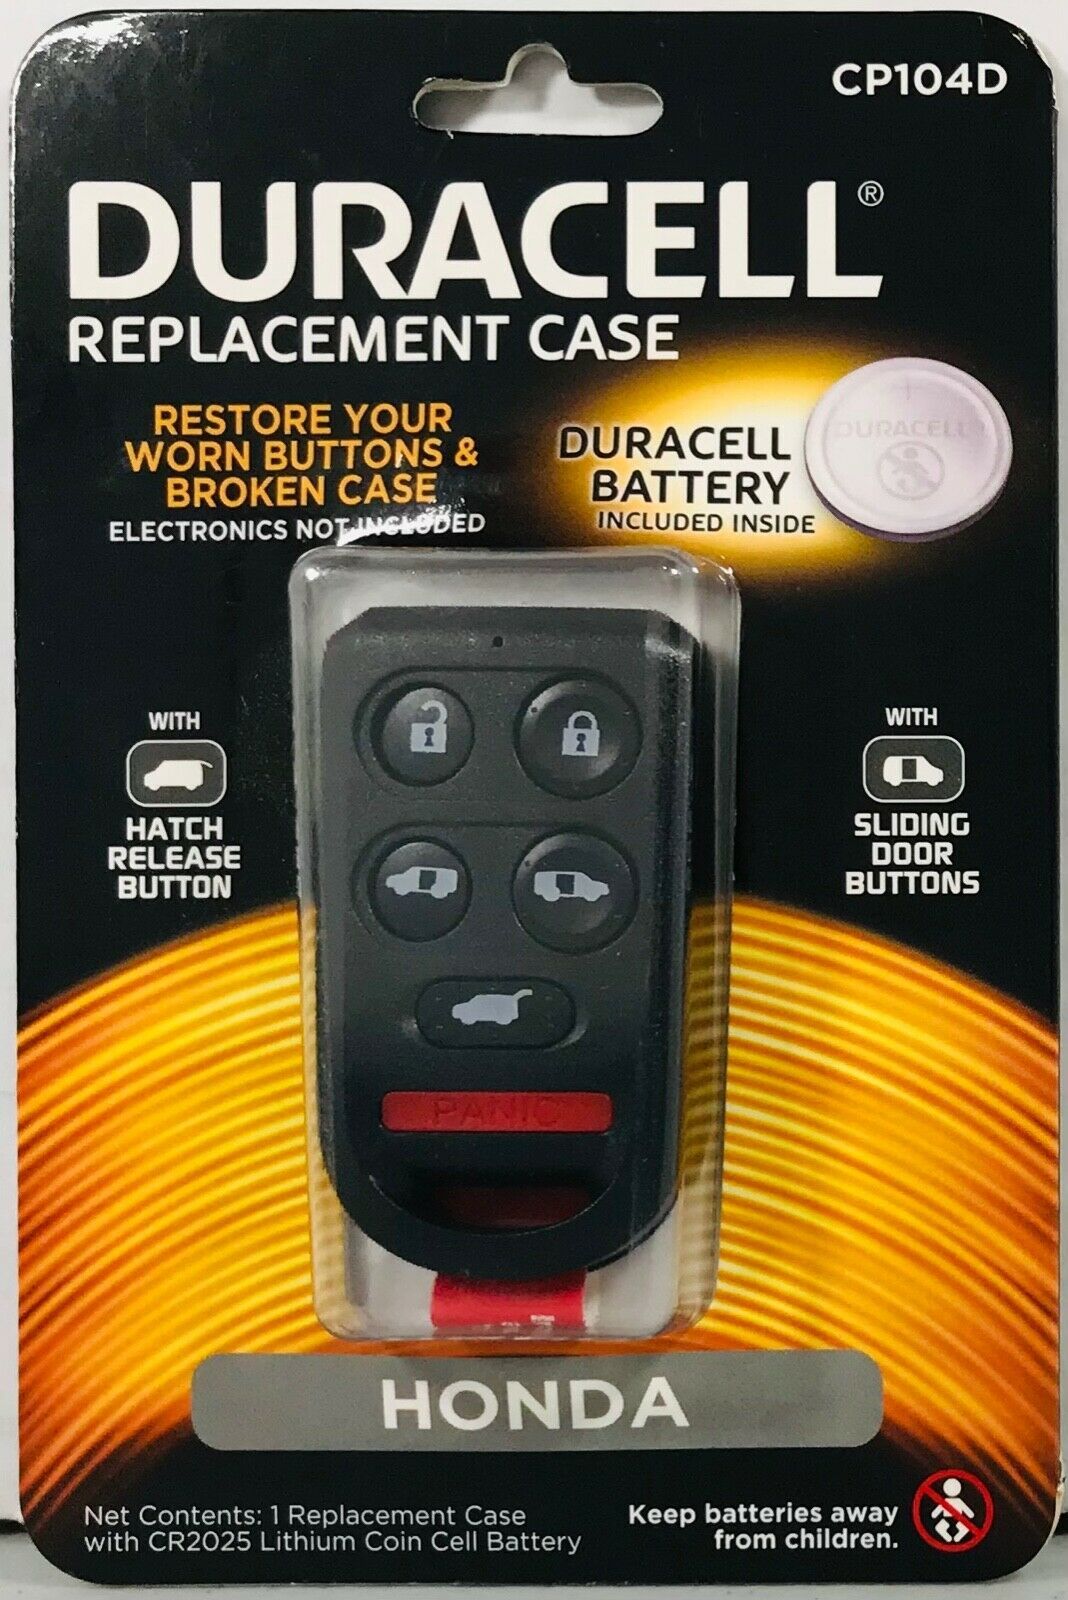 Honda Duracell Replacement Case CP104D Restore Your Worn Buttons & Broken Case - $15.95